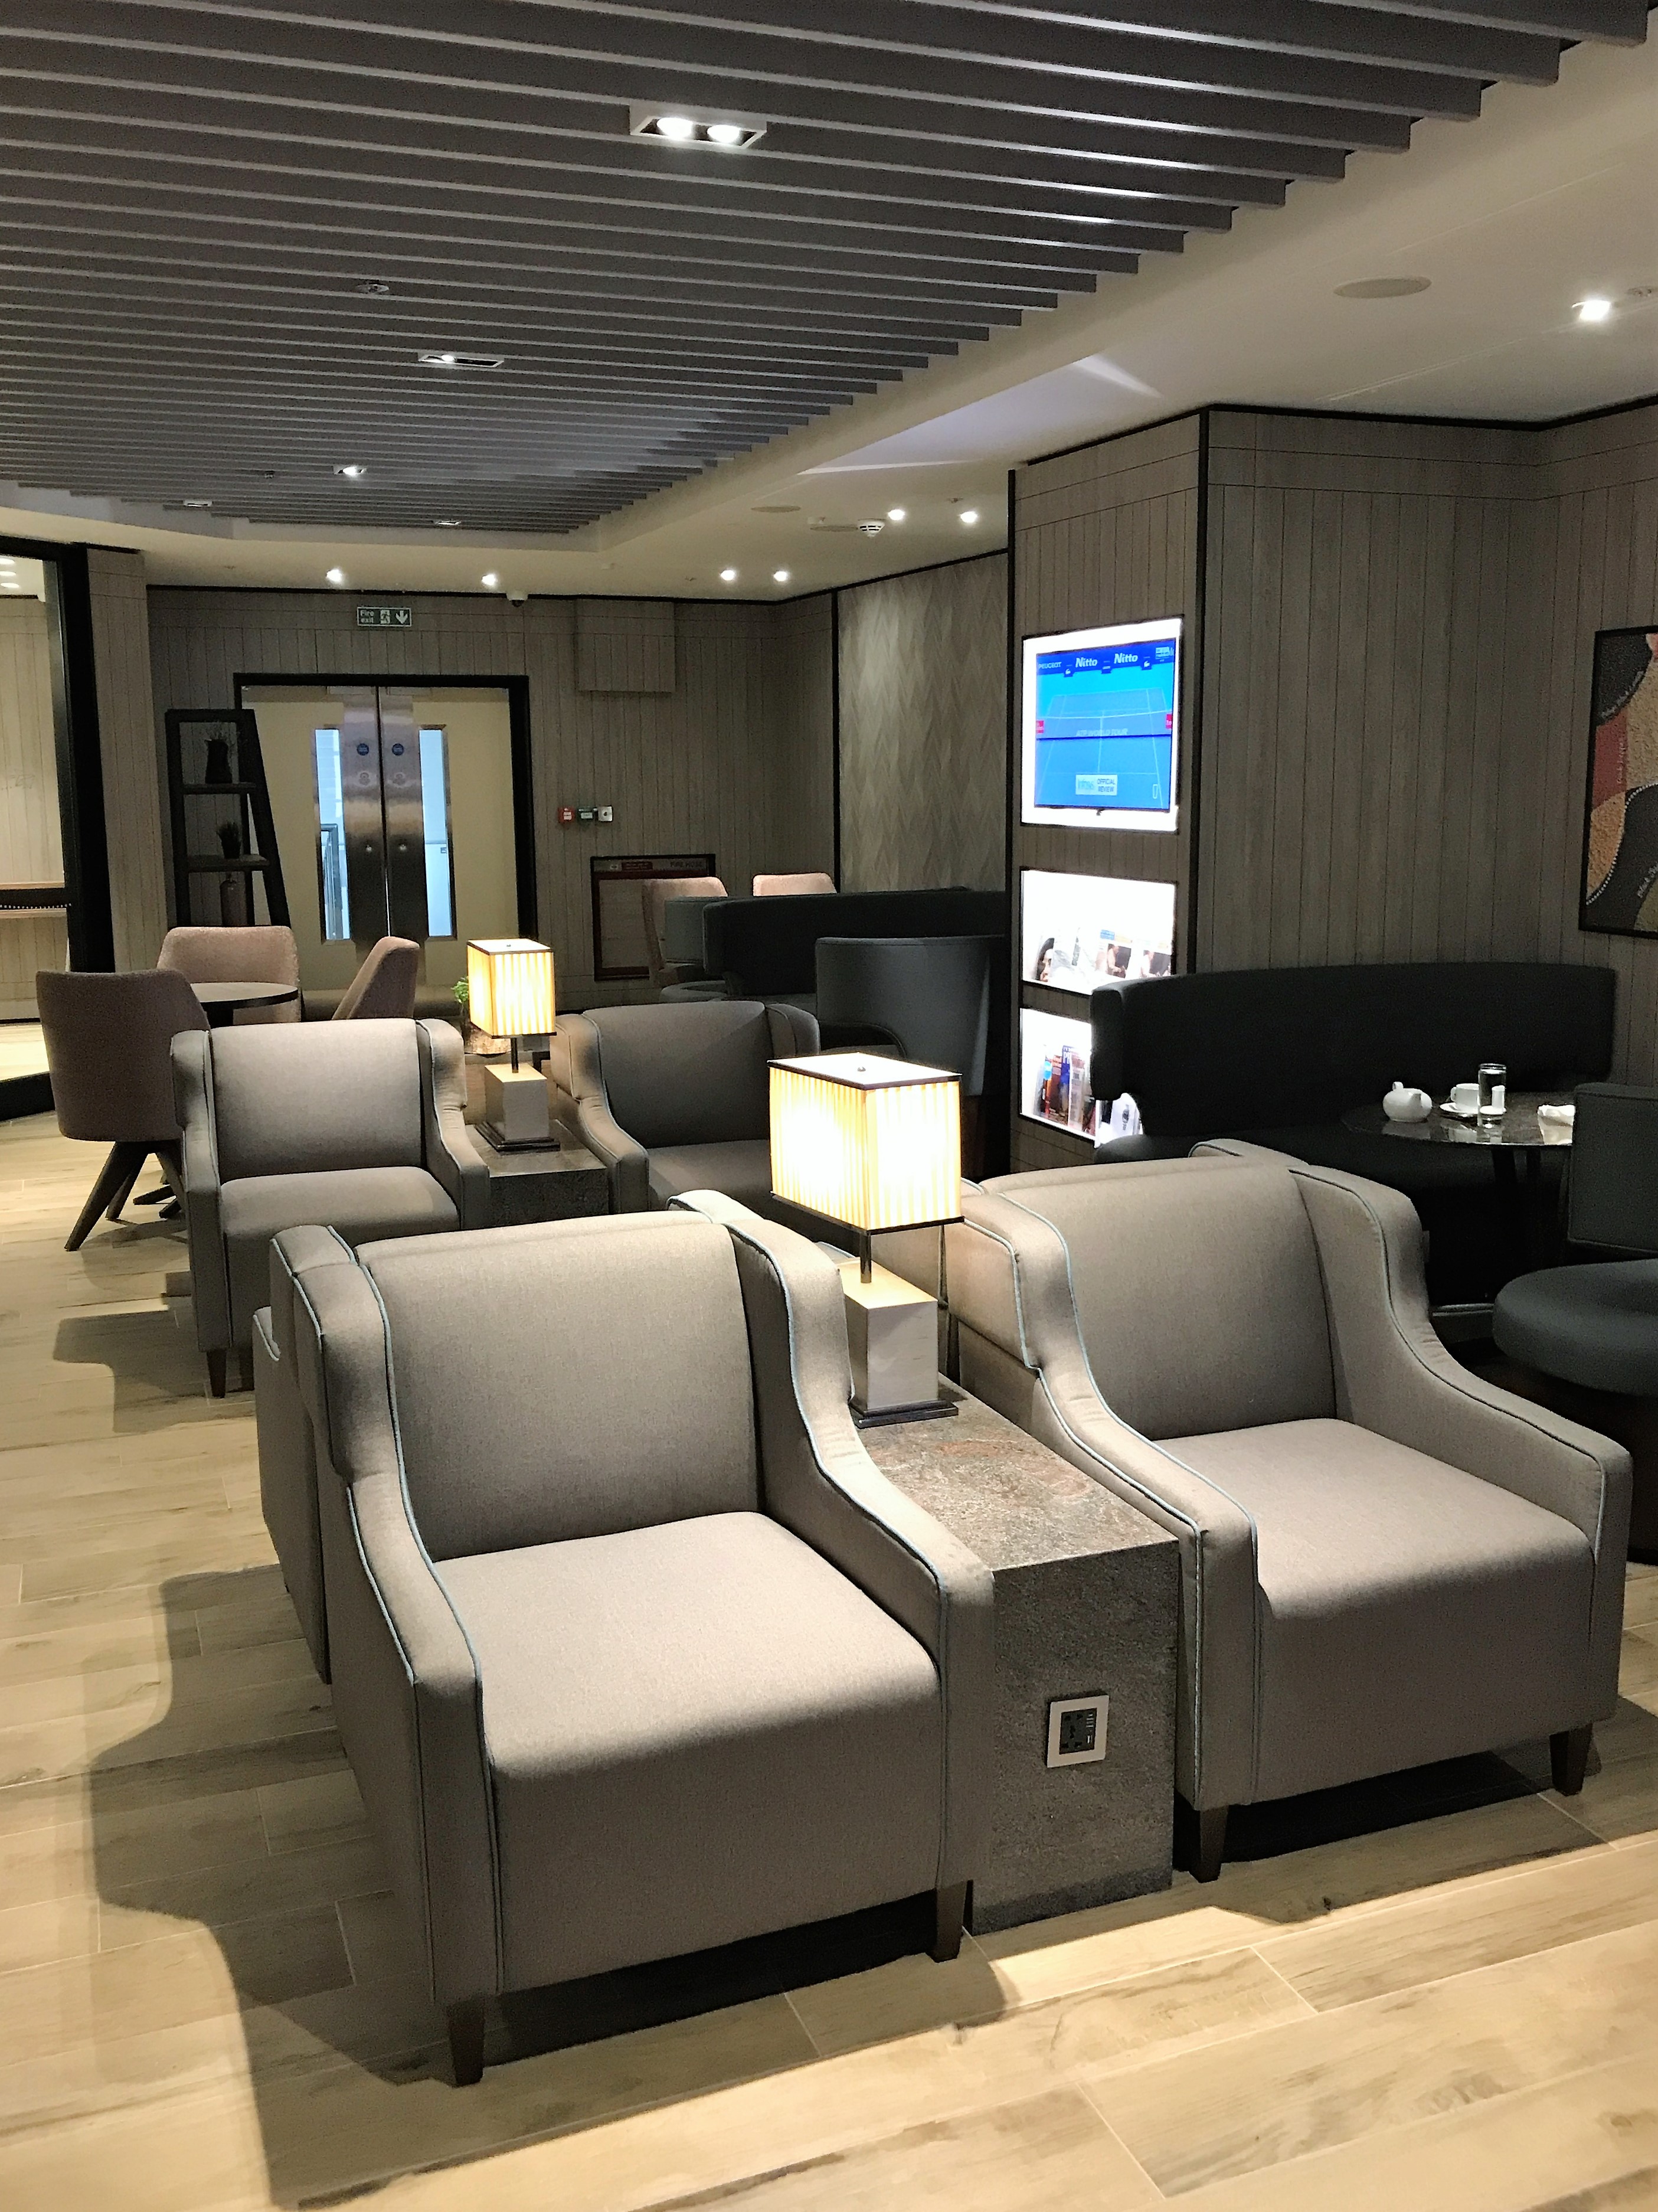 Plaza Premium arrivals lounge Heathrow Terminal 4 review